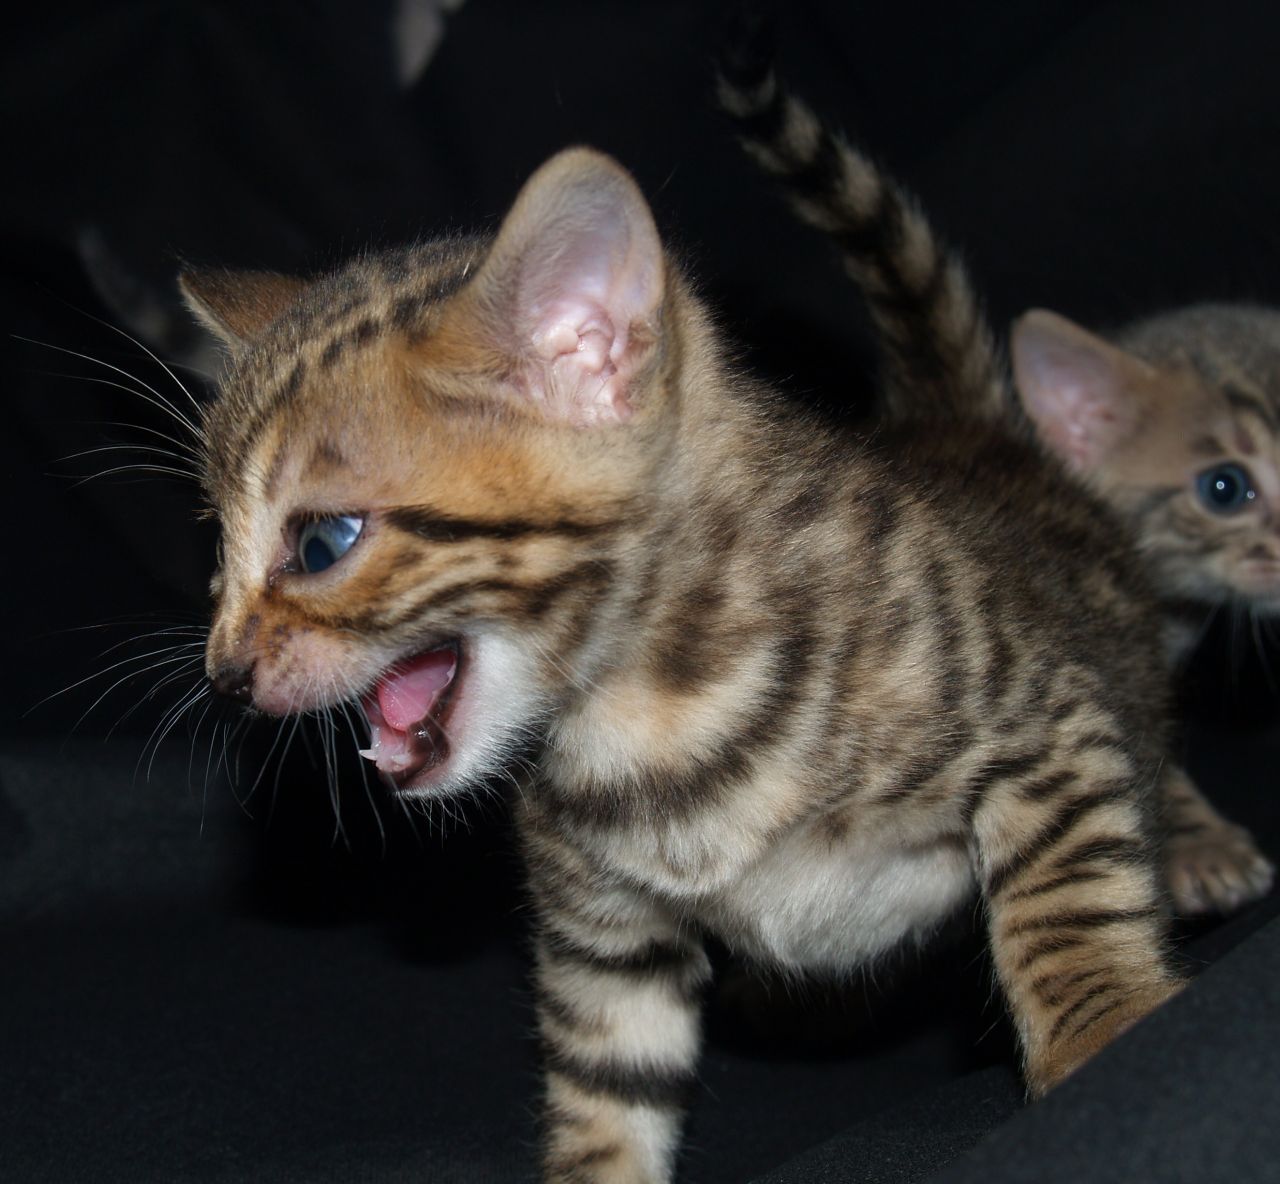  Beautiful Bengal Kittens 